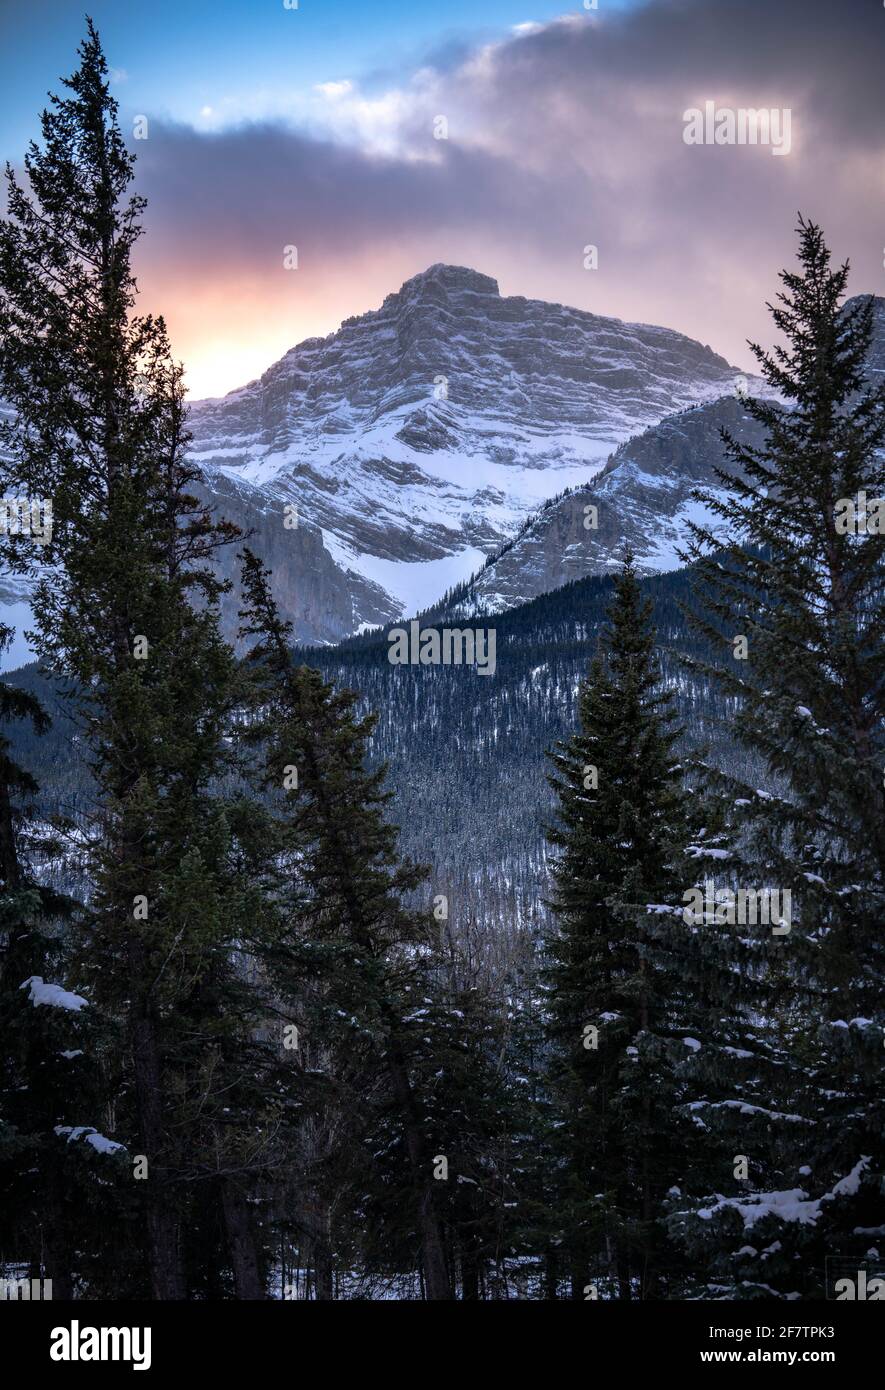 Stunning Banff scenery rocky mountains in winter at dusk sunset Stock Photo